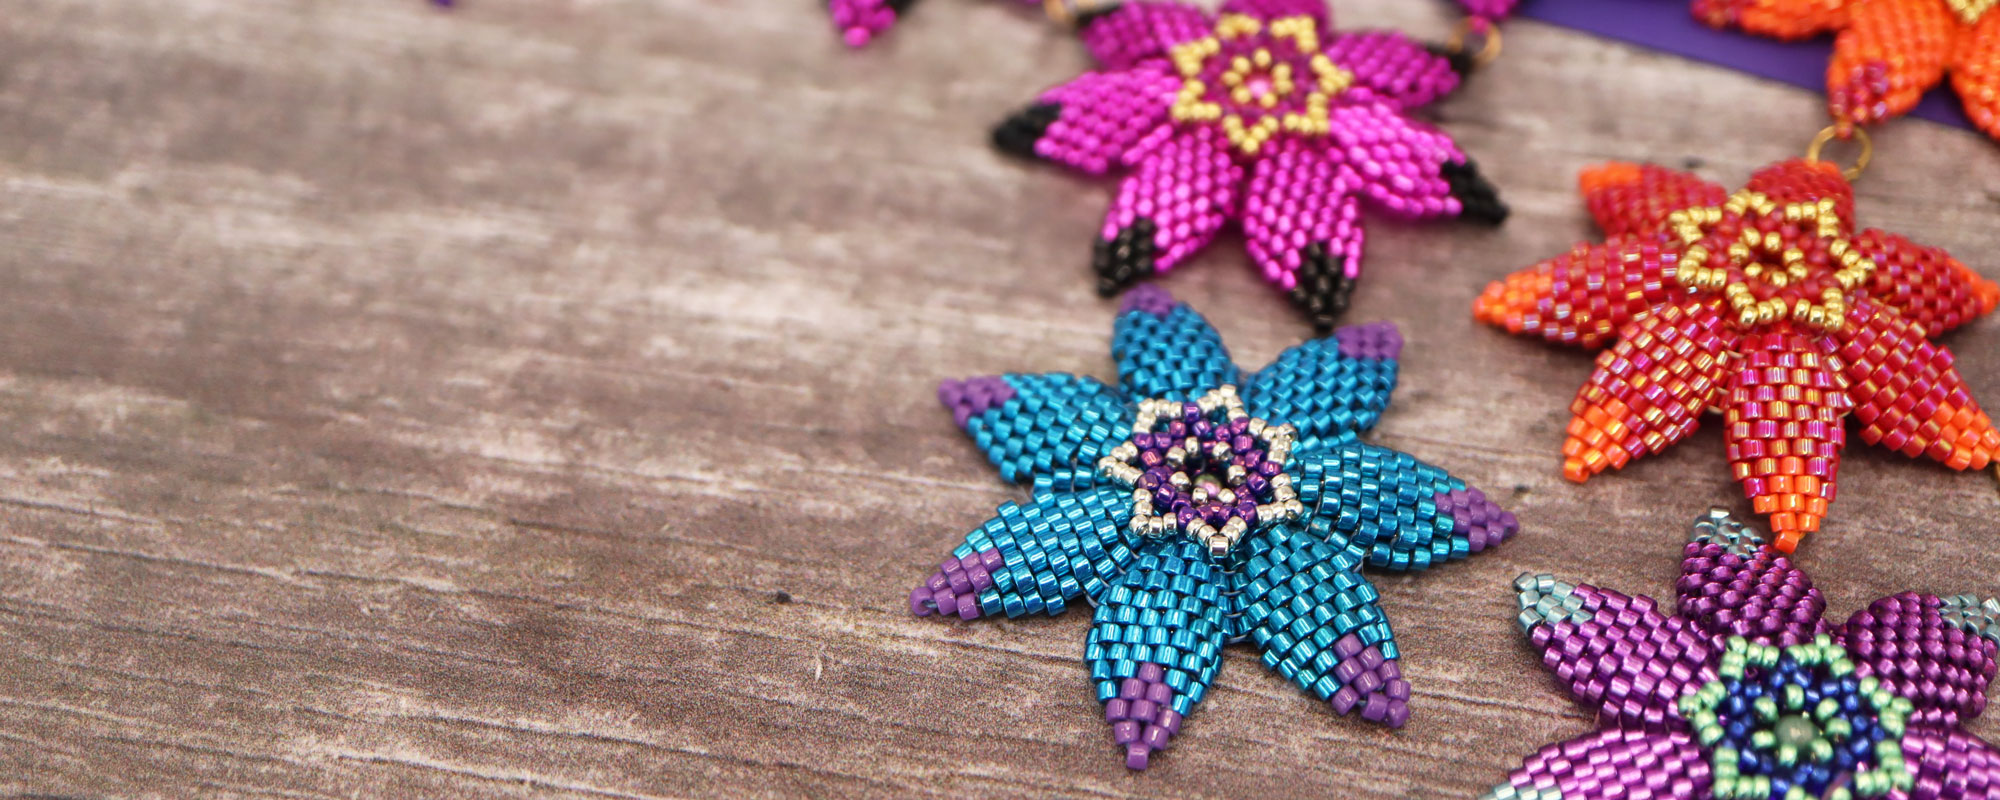 Jazzy Flowers Brick stitch beading pattern by Chloe Menage using Miyuki Delica beads and seed beads